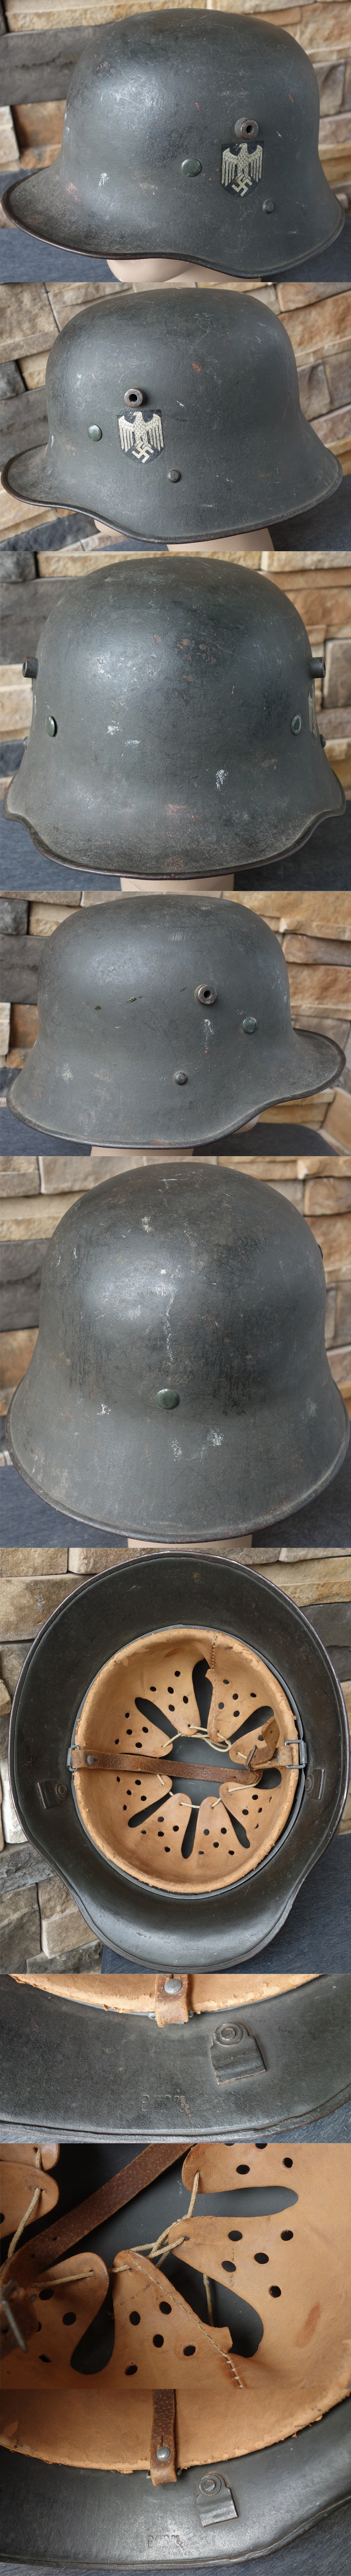 Army M16 Re-Issue Austrian Helmet